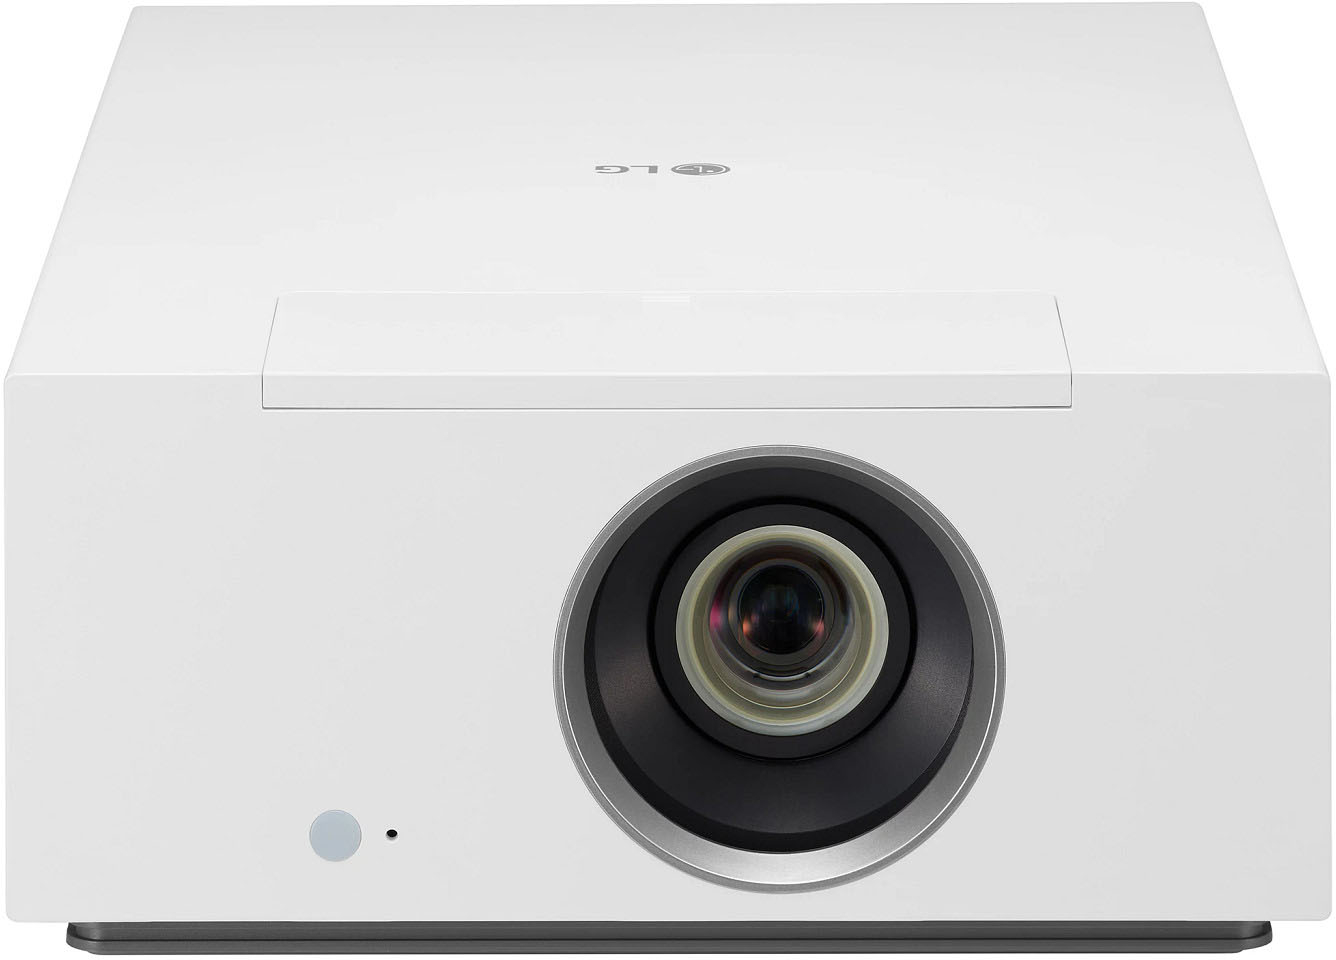 LG LG HU70LA 4K UHD LED Smart Home Theater CineBeam Projector for sale  online